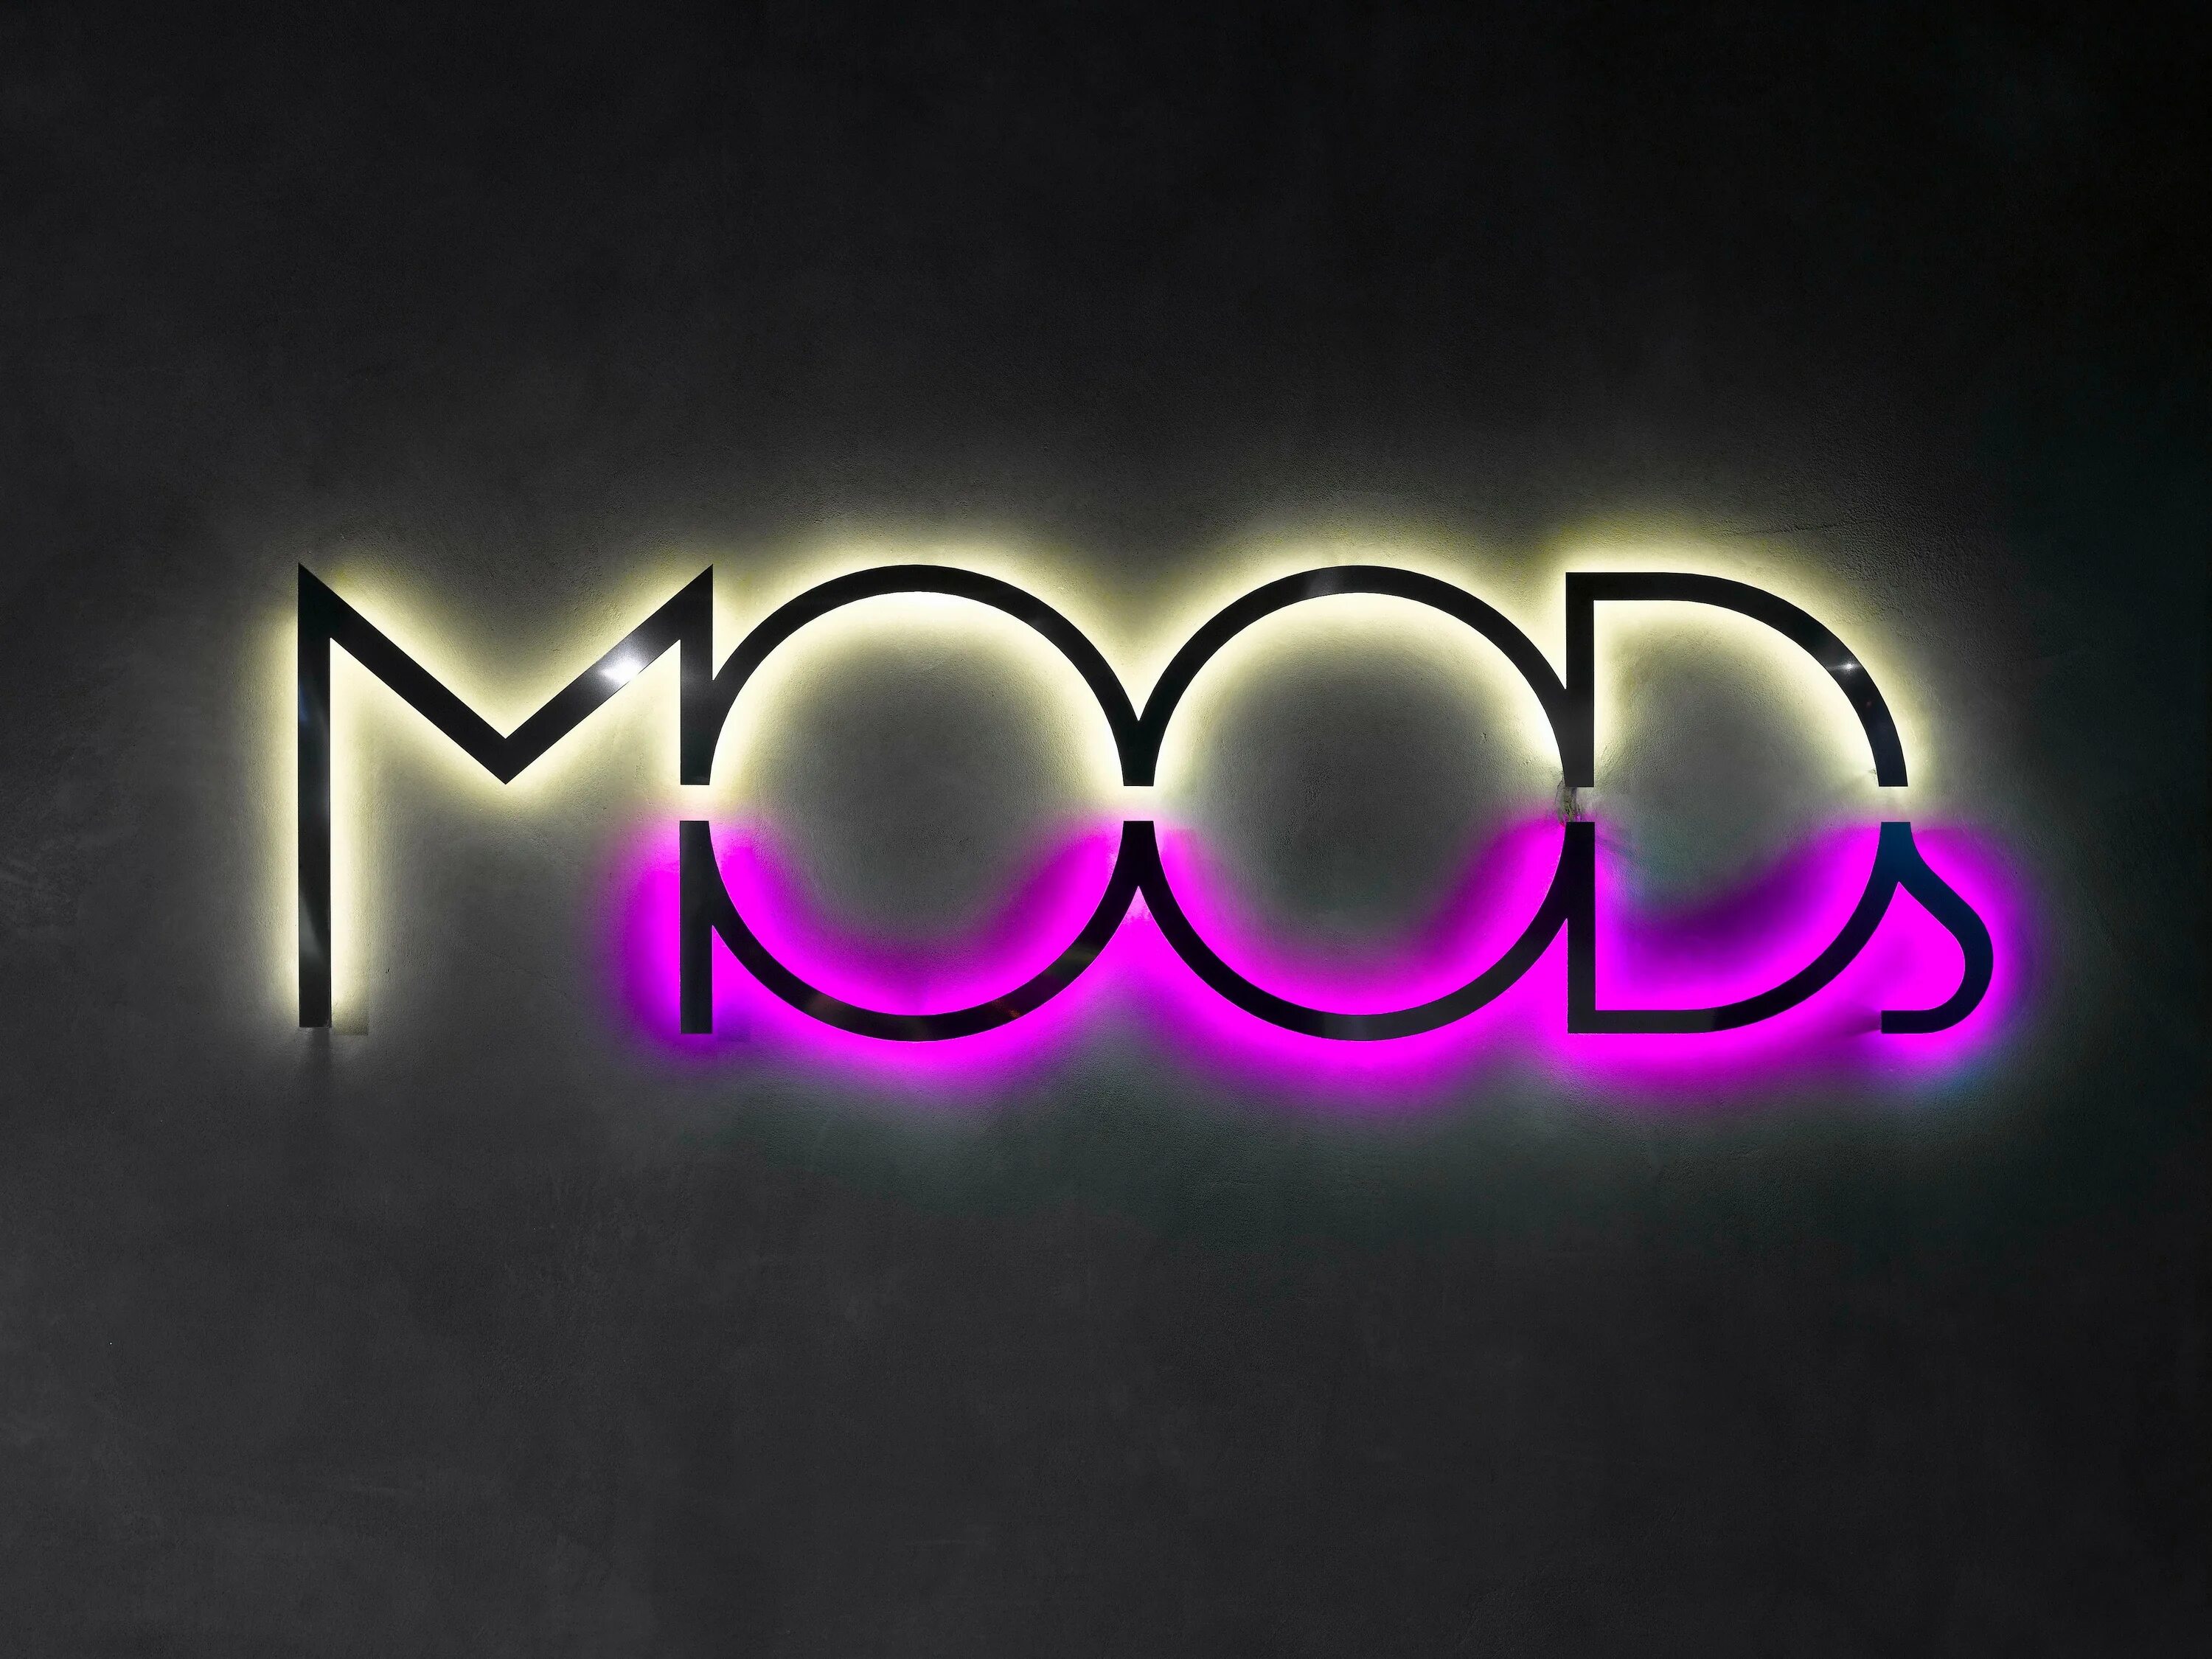 Mood lot. Mood надпись. Mood картинки. Mood логотип. Картинки с надписью mood.